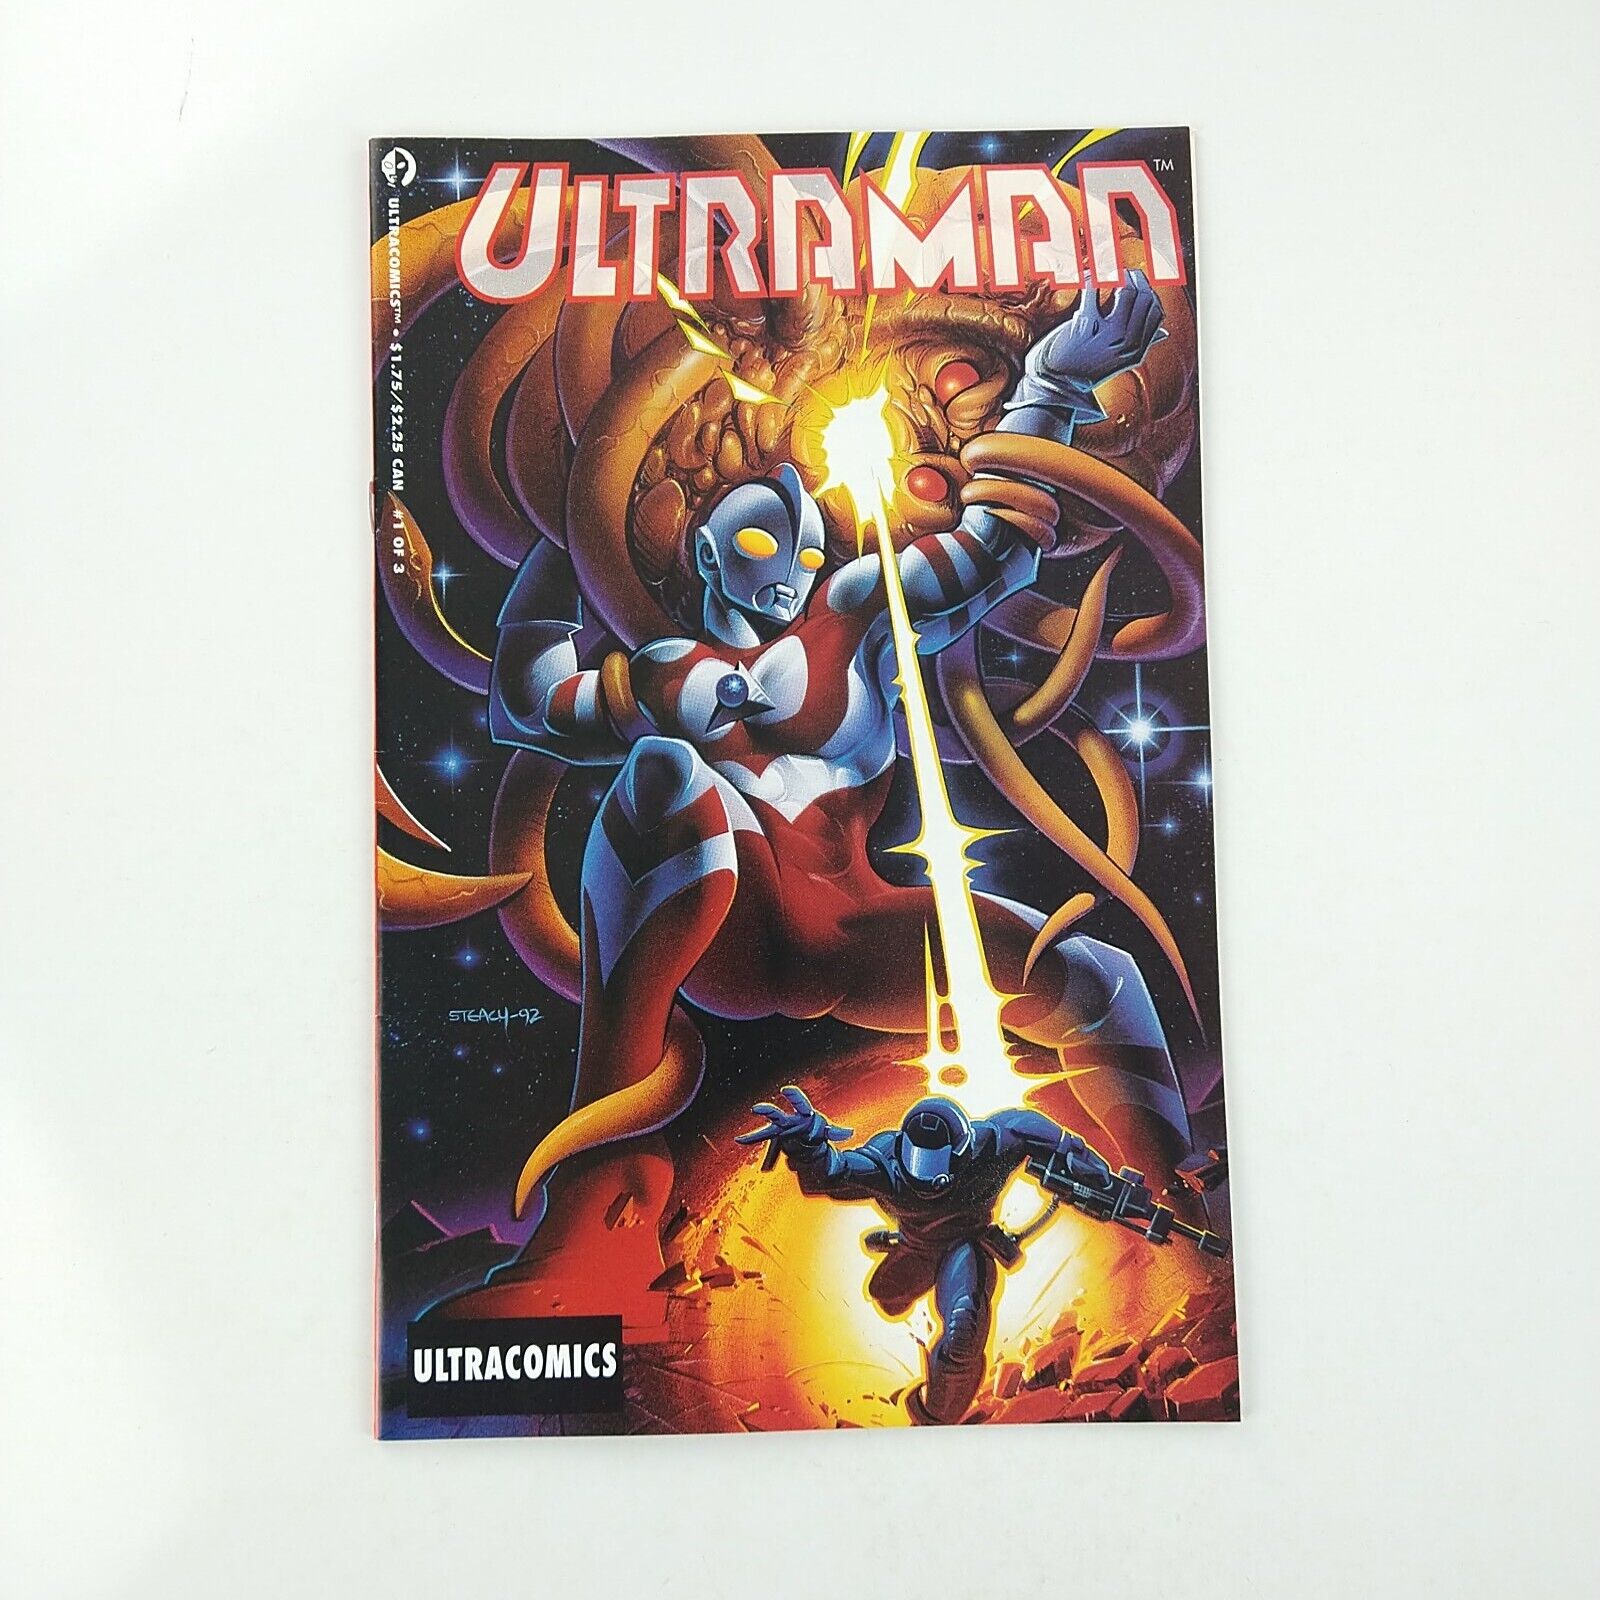 Ultraman #1 of 3 NM (1993 Ultracomics)